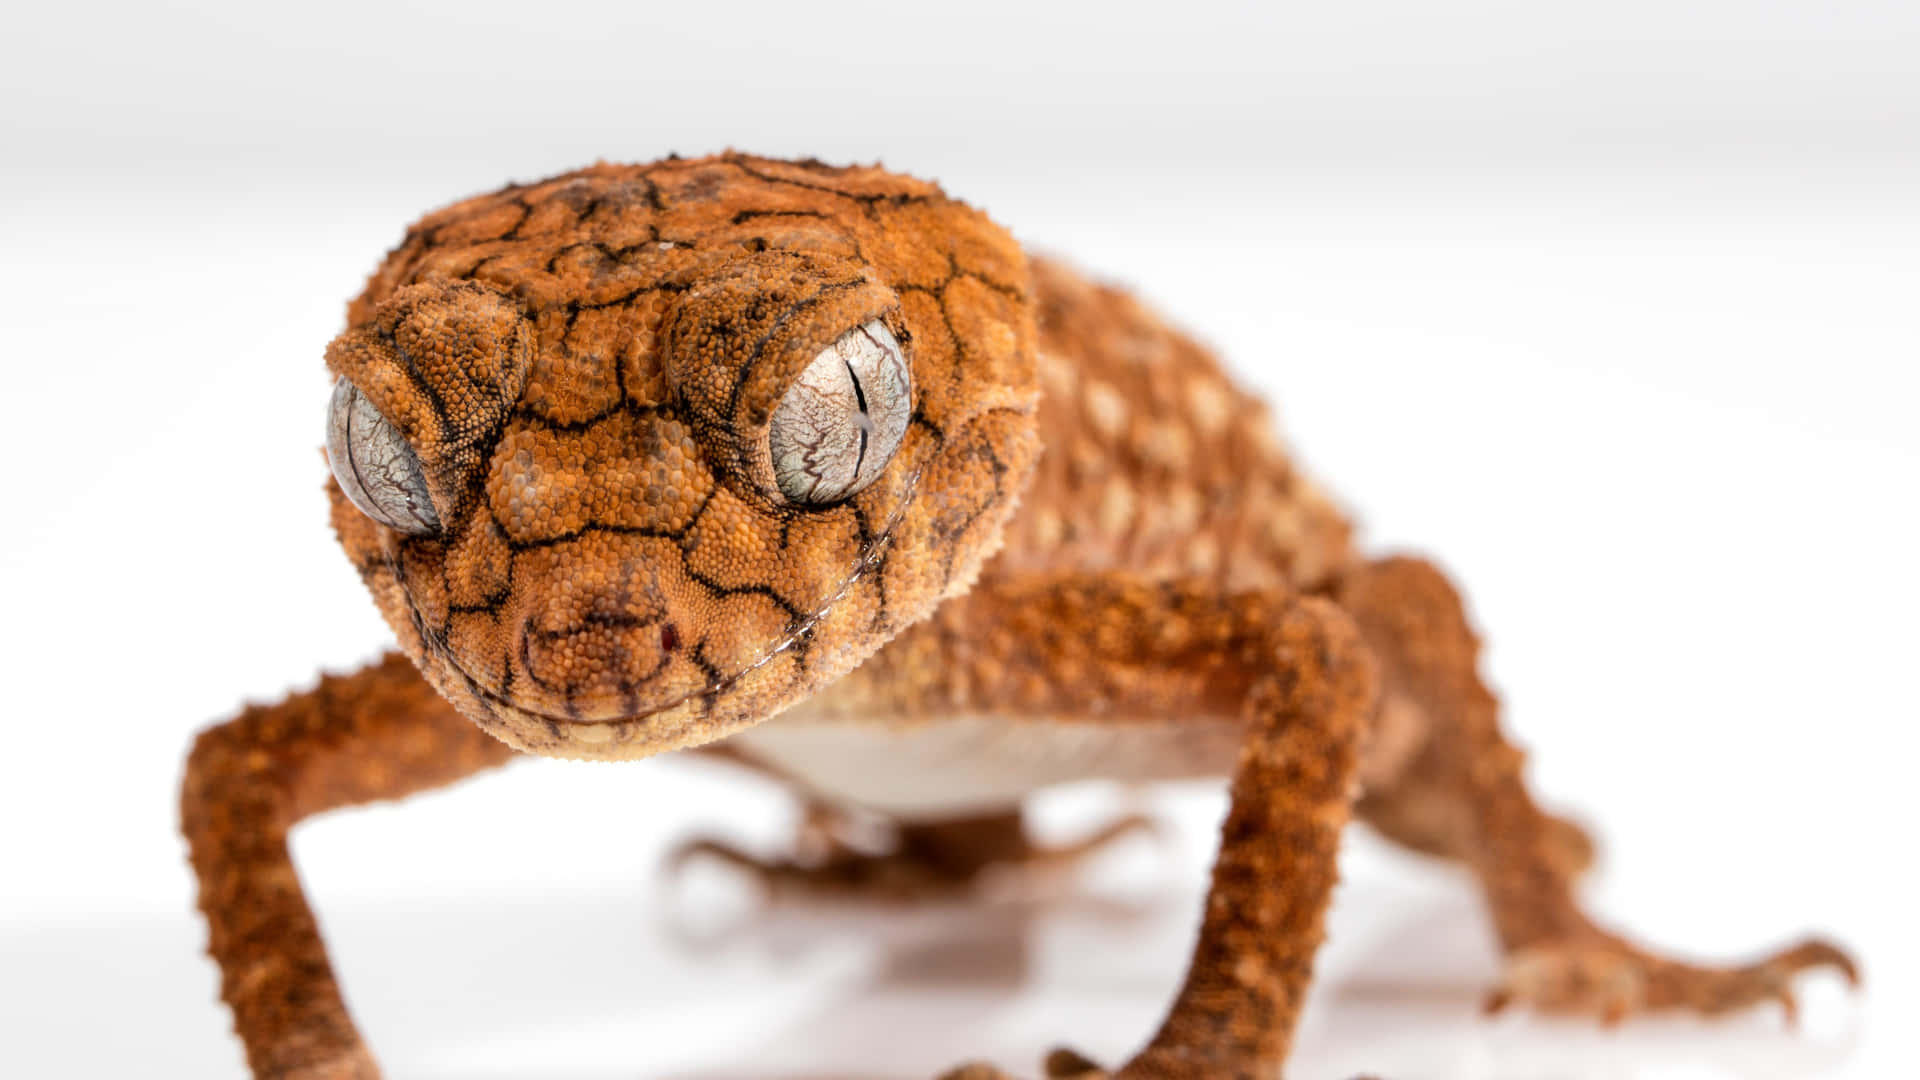 Brown Gecko Lizard Close Up Picture